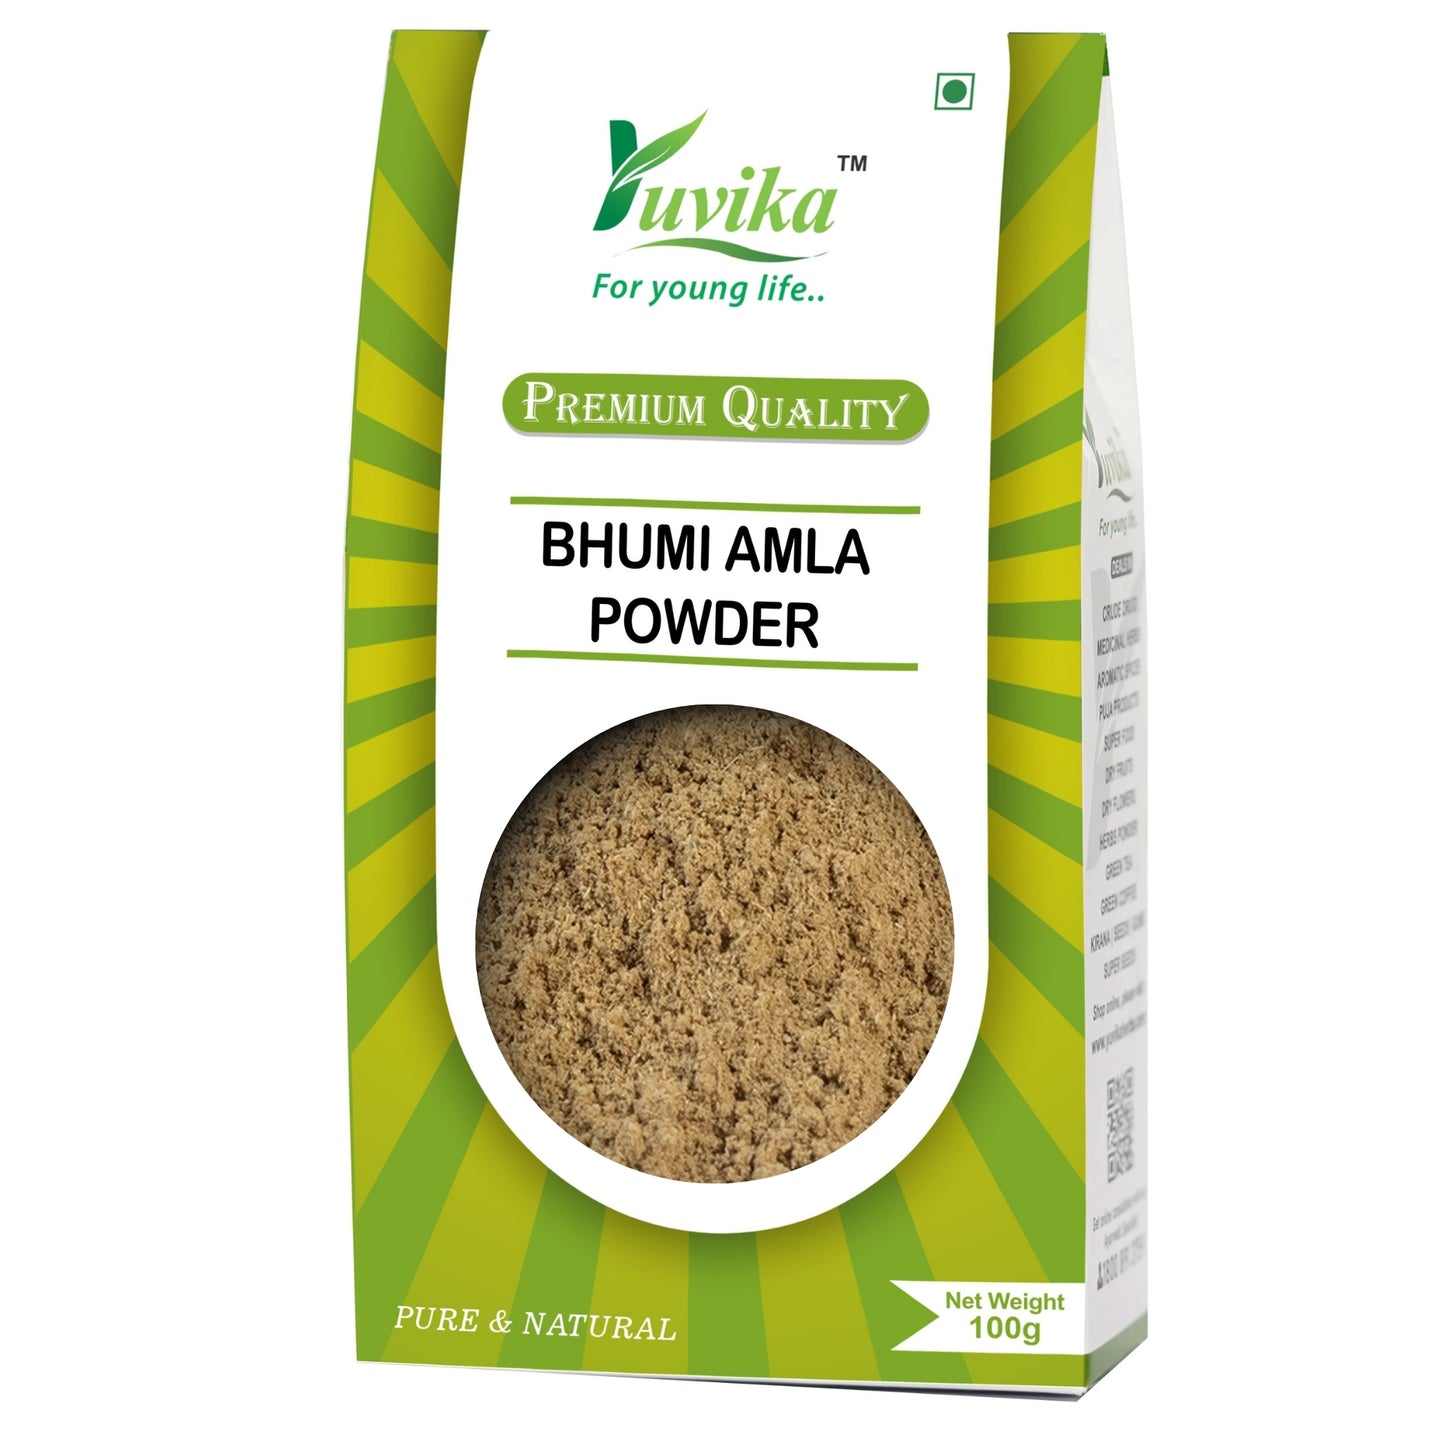 Bhumi Amla Powder - Bhoomi Awla Powder- Phyllanthus Niruri - Fillanto Niruhi (100g)